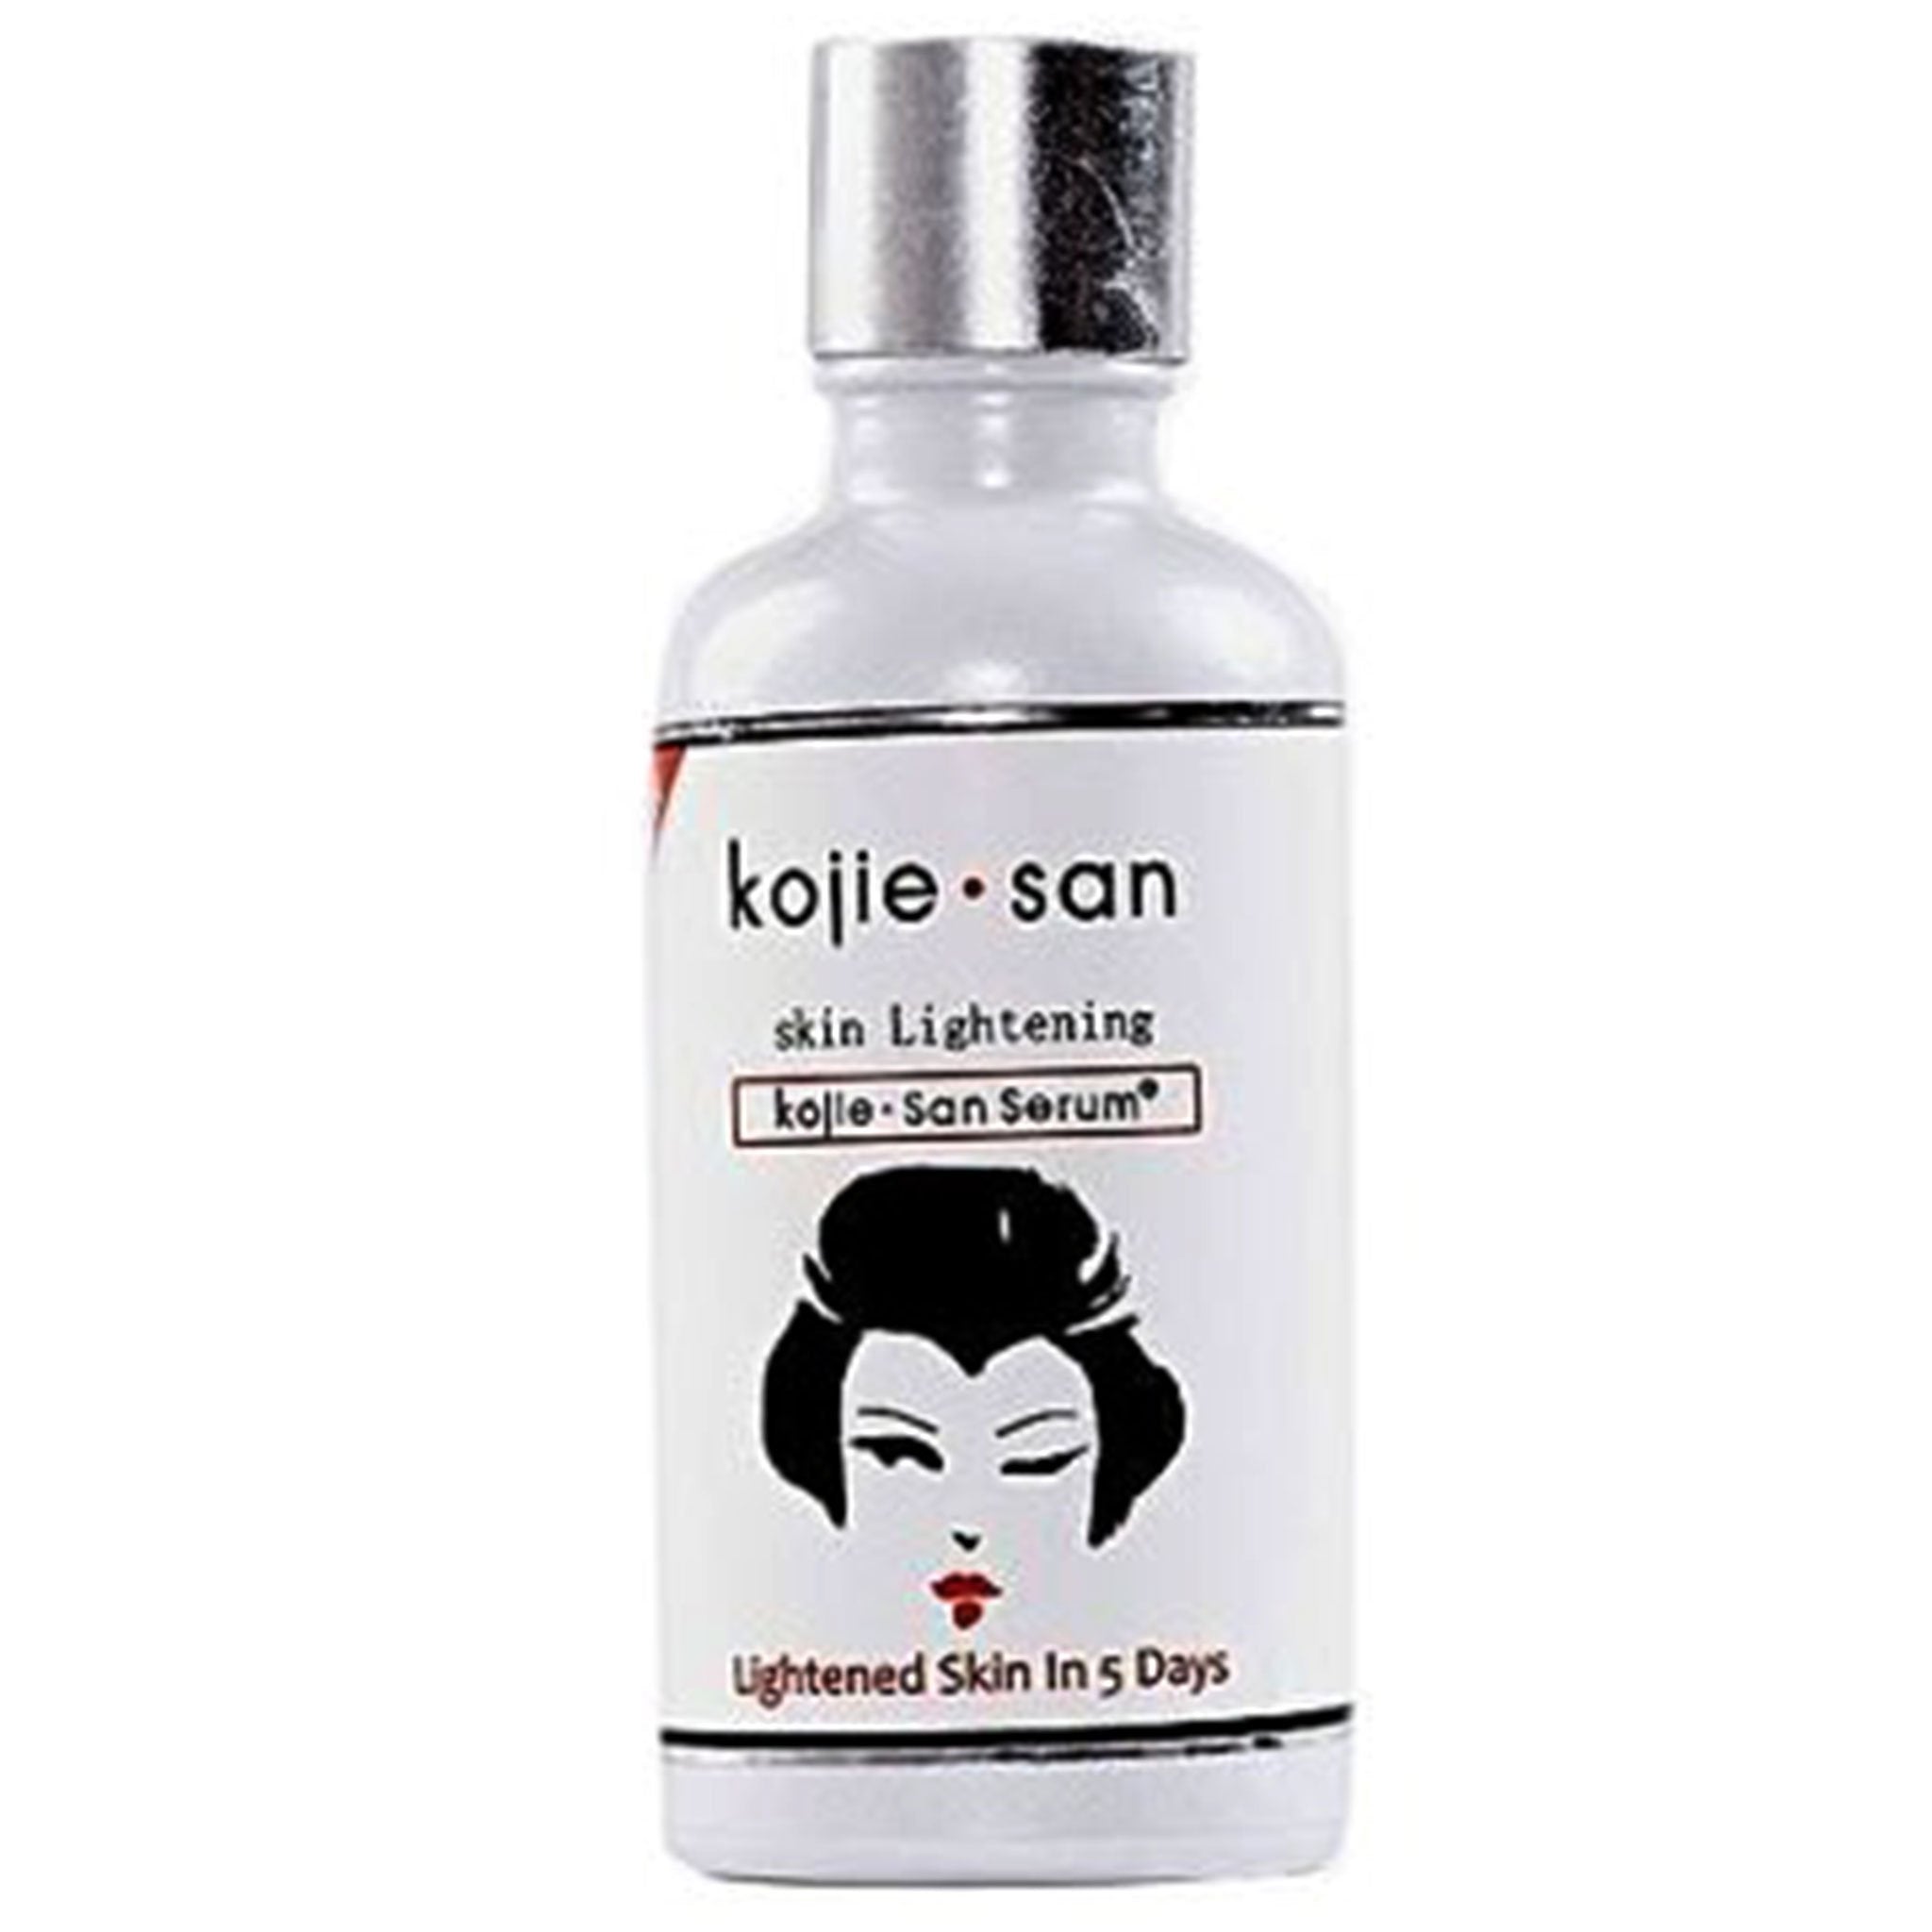 Kojic Acid Serum 50ml - Lightened Skin in 5 Days/Made in Japan - Simpal Boutique